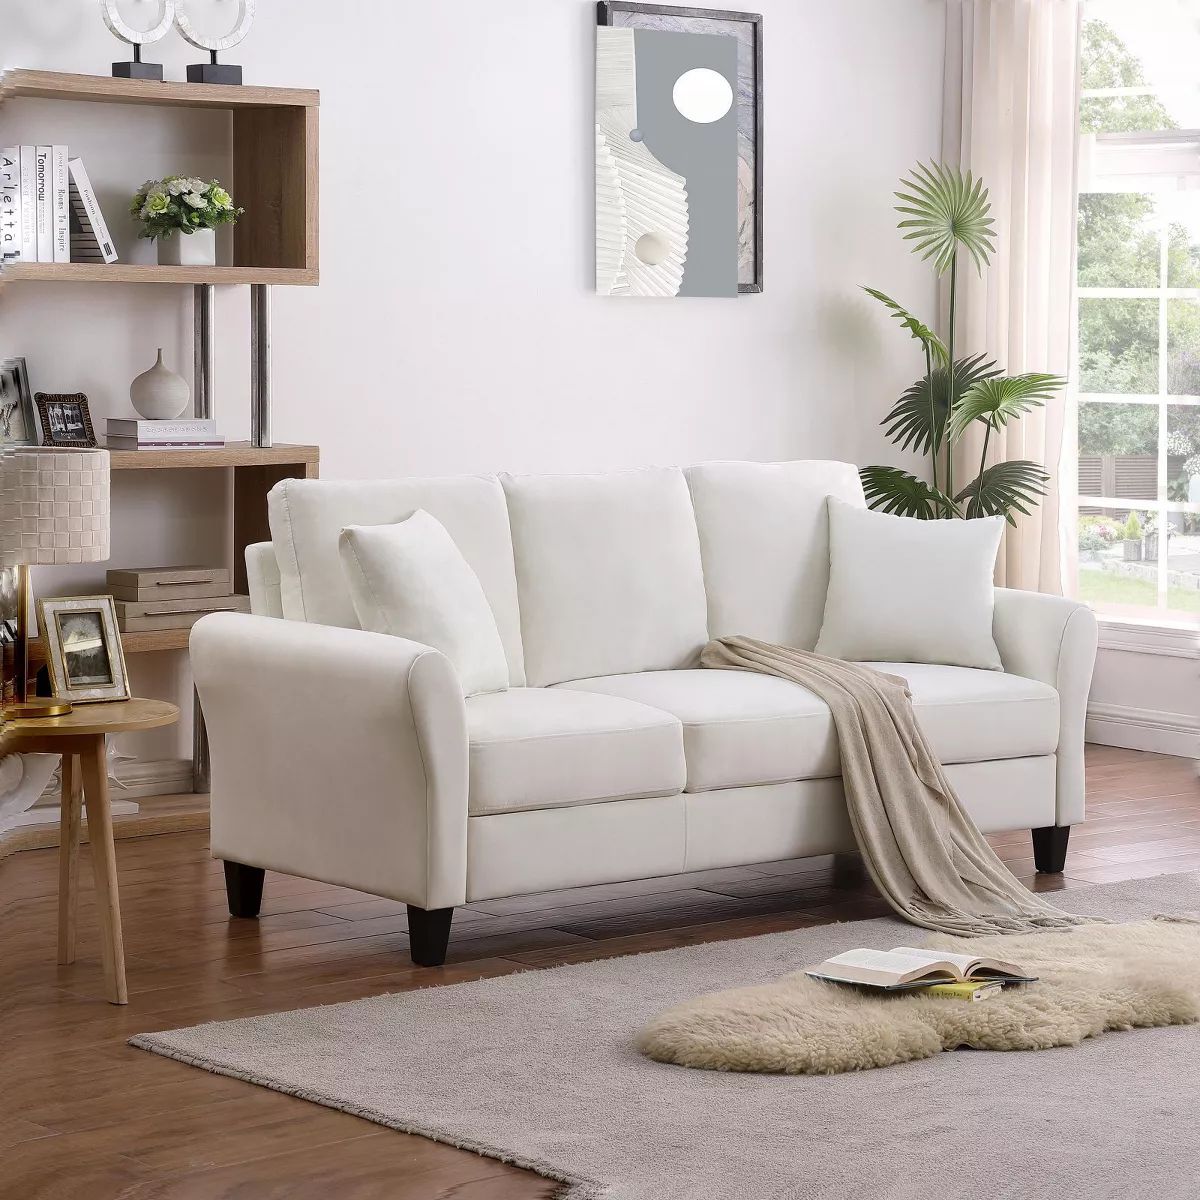 Clio Velvet Upholstered 3 Seater Sofa Couch,78 inches Long Sofas,Modern Velvet Couch 3 Seater Sof... | Target